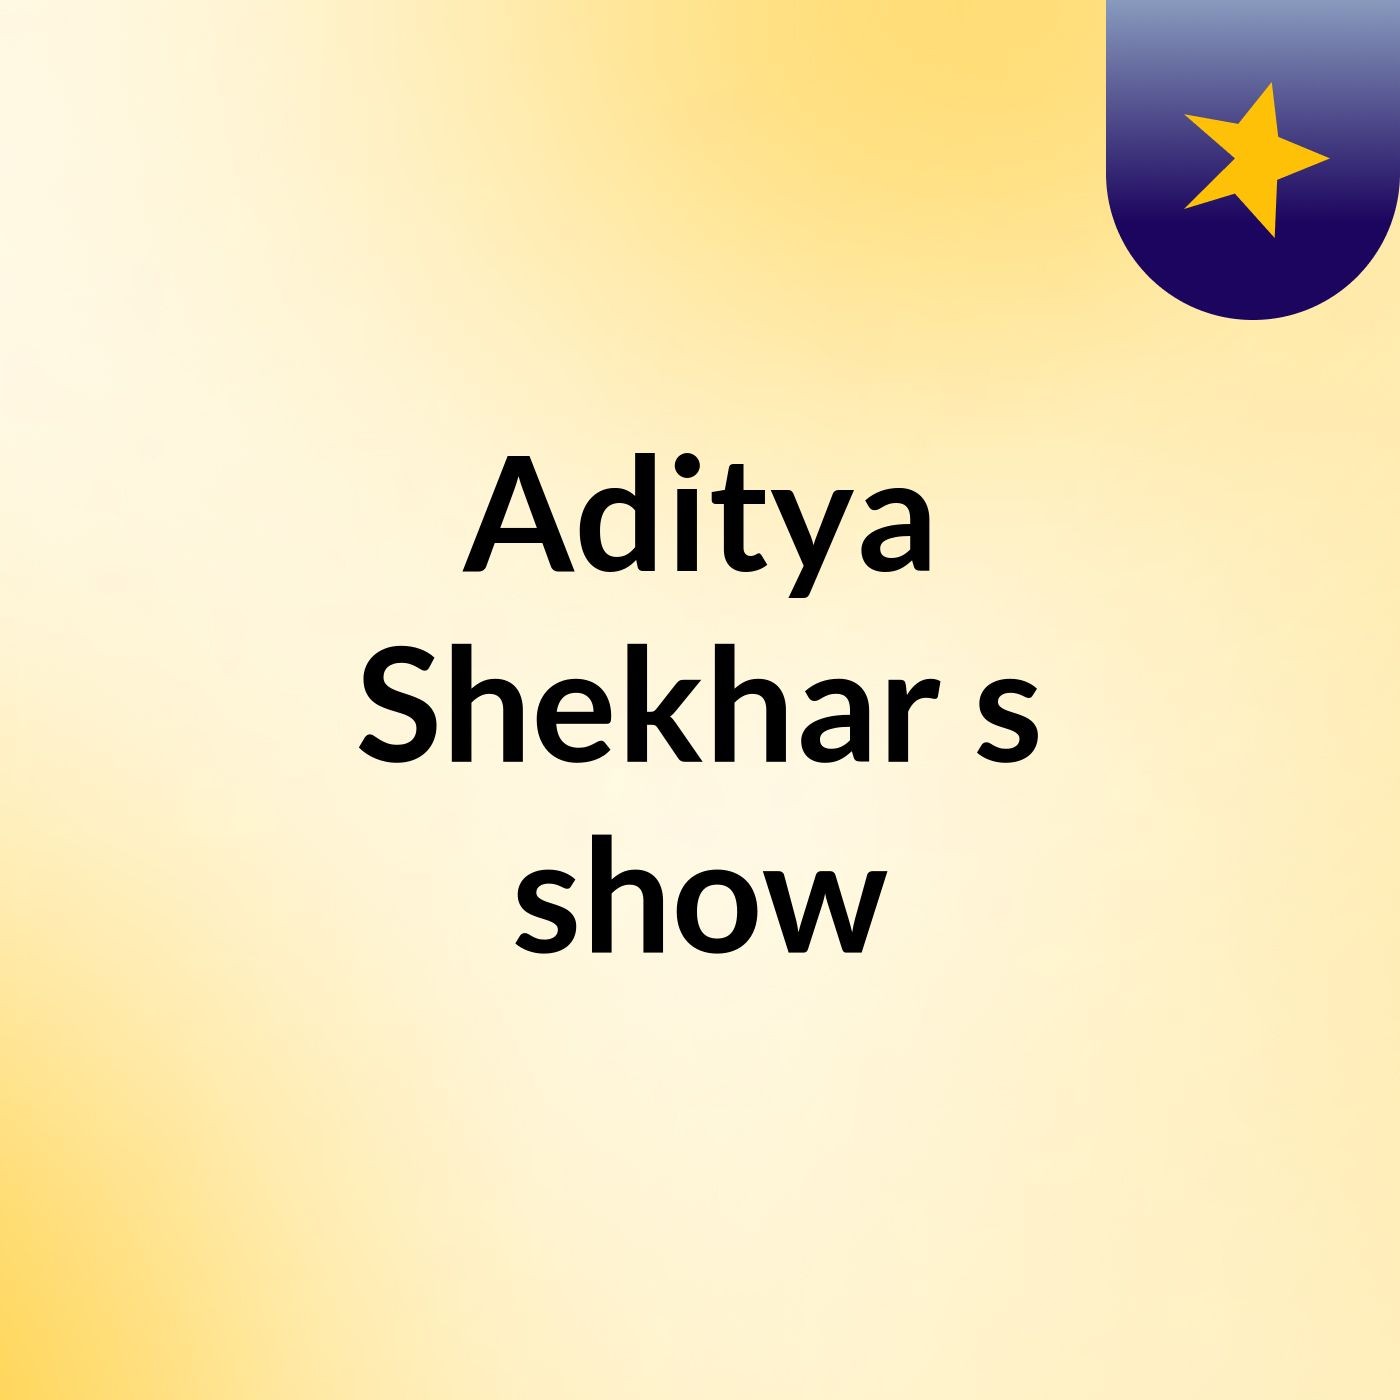 Aditya Shekhar's show